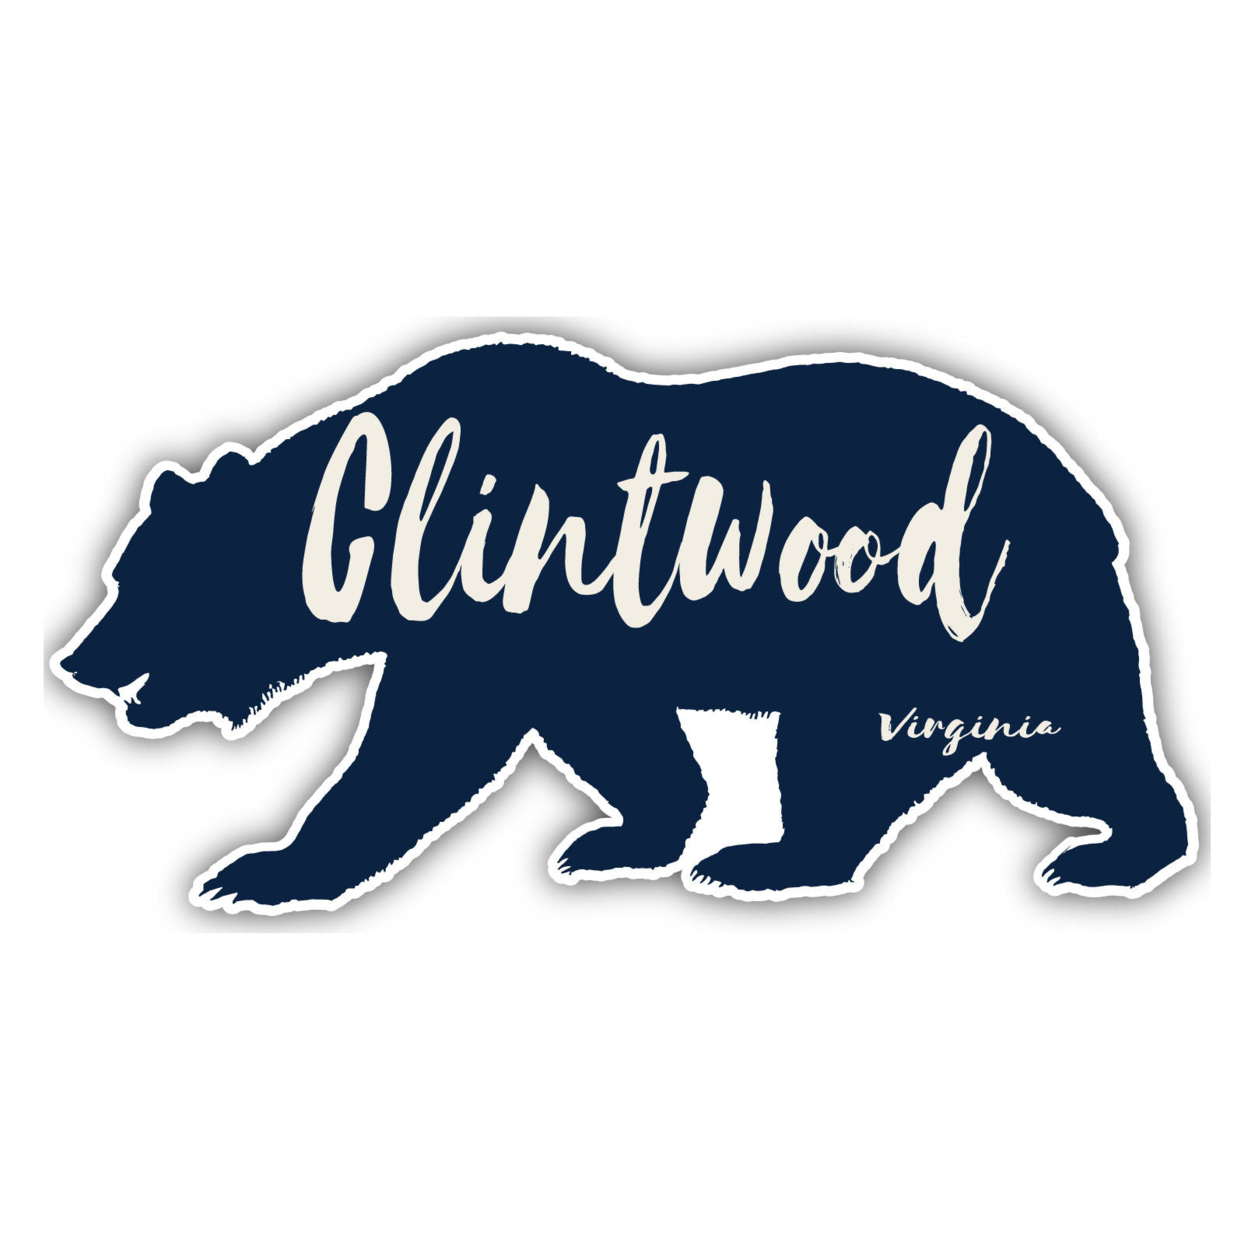 Clintwood Virginia Souvenir Decorative Stickers (Choose Theme And Size) - Single Unit, 2-Inch, Bear